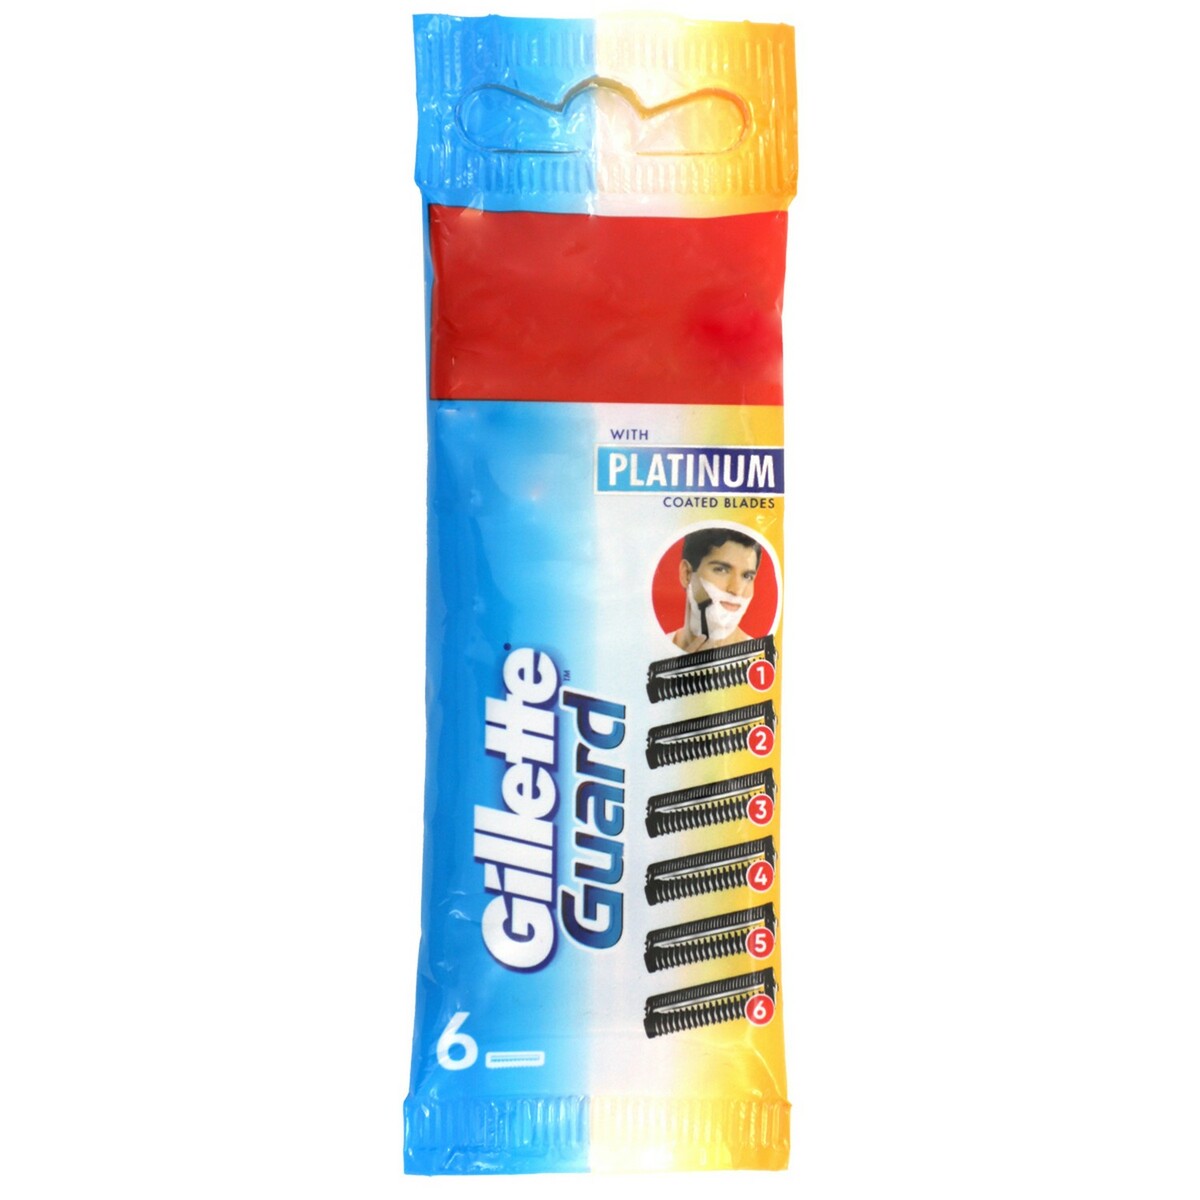 Gillette Cartridge Guard 6's